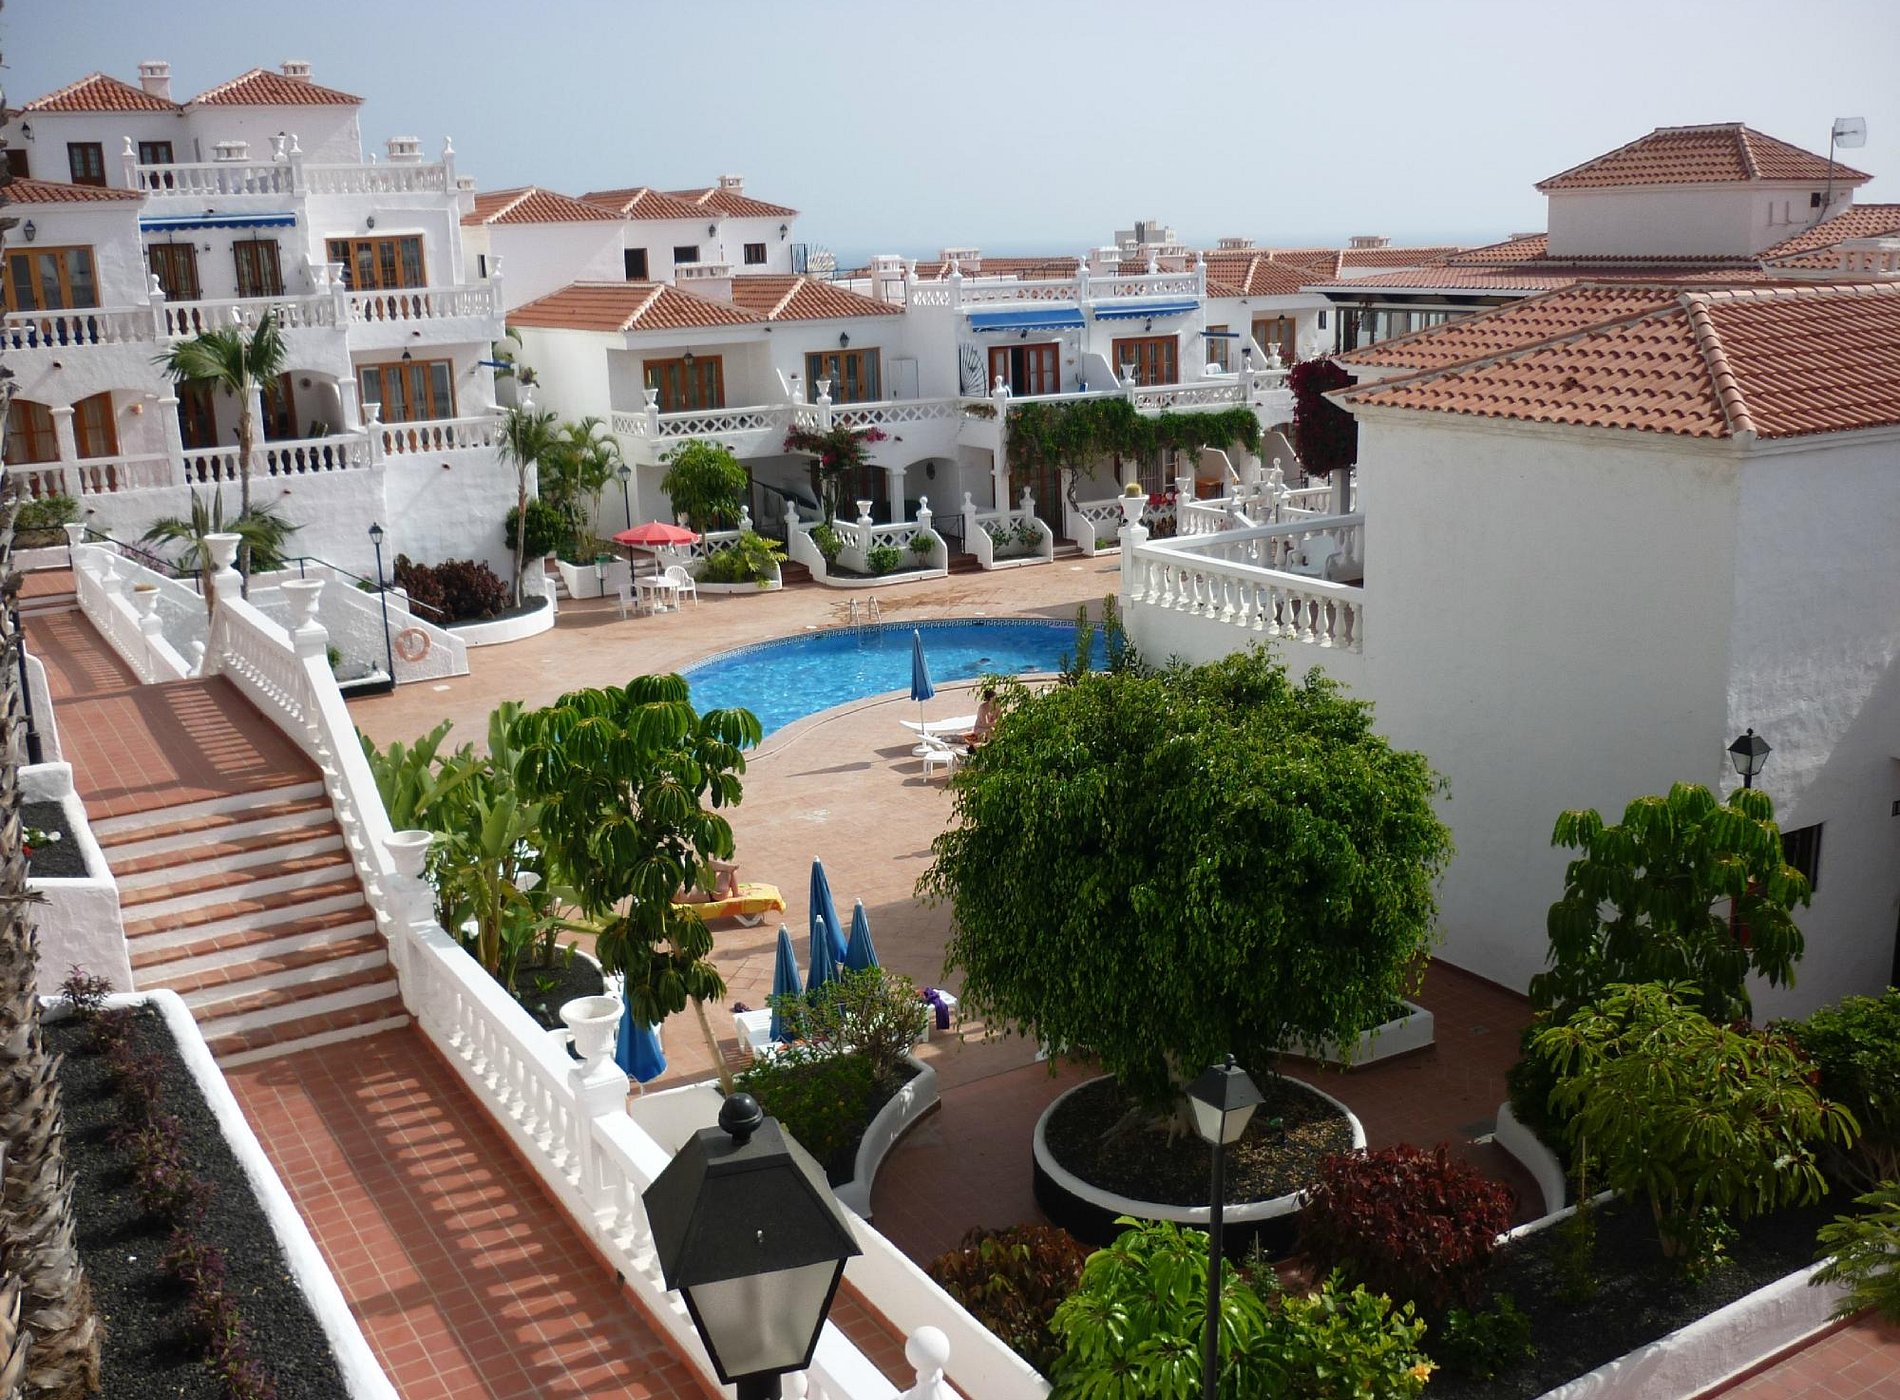 Royal Palm Holiday Apartments Tenerife image